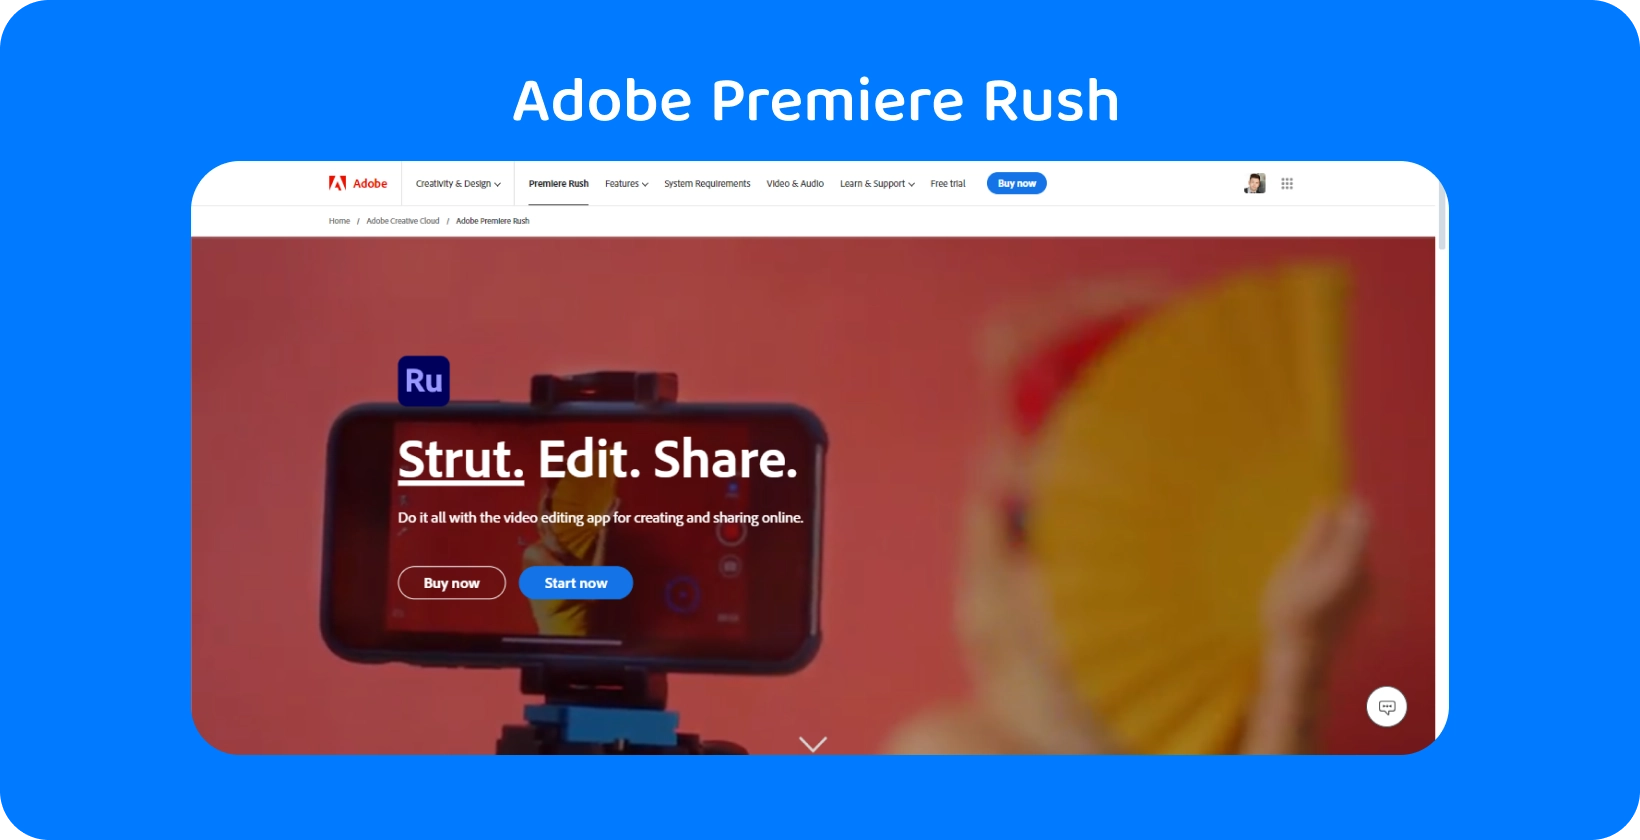 Adobe Premiere Rush 安装在三脚架上的智能手机上，标语为“Strut. Edit. Share.”，用于视频编辑。